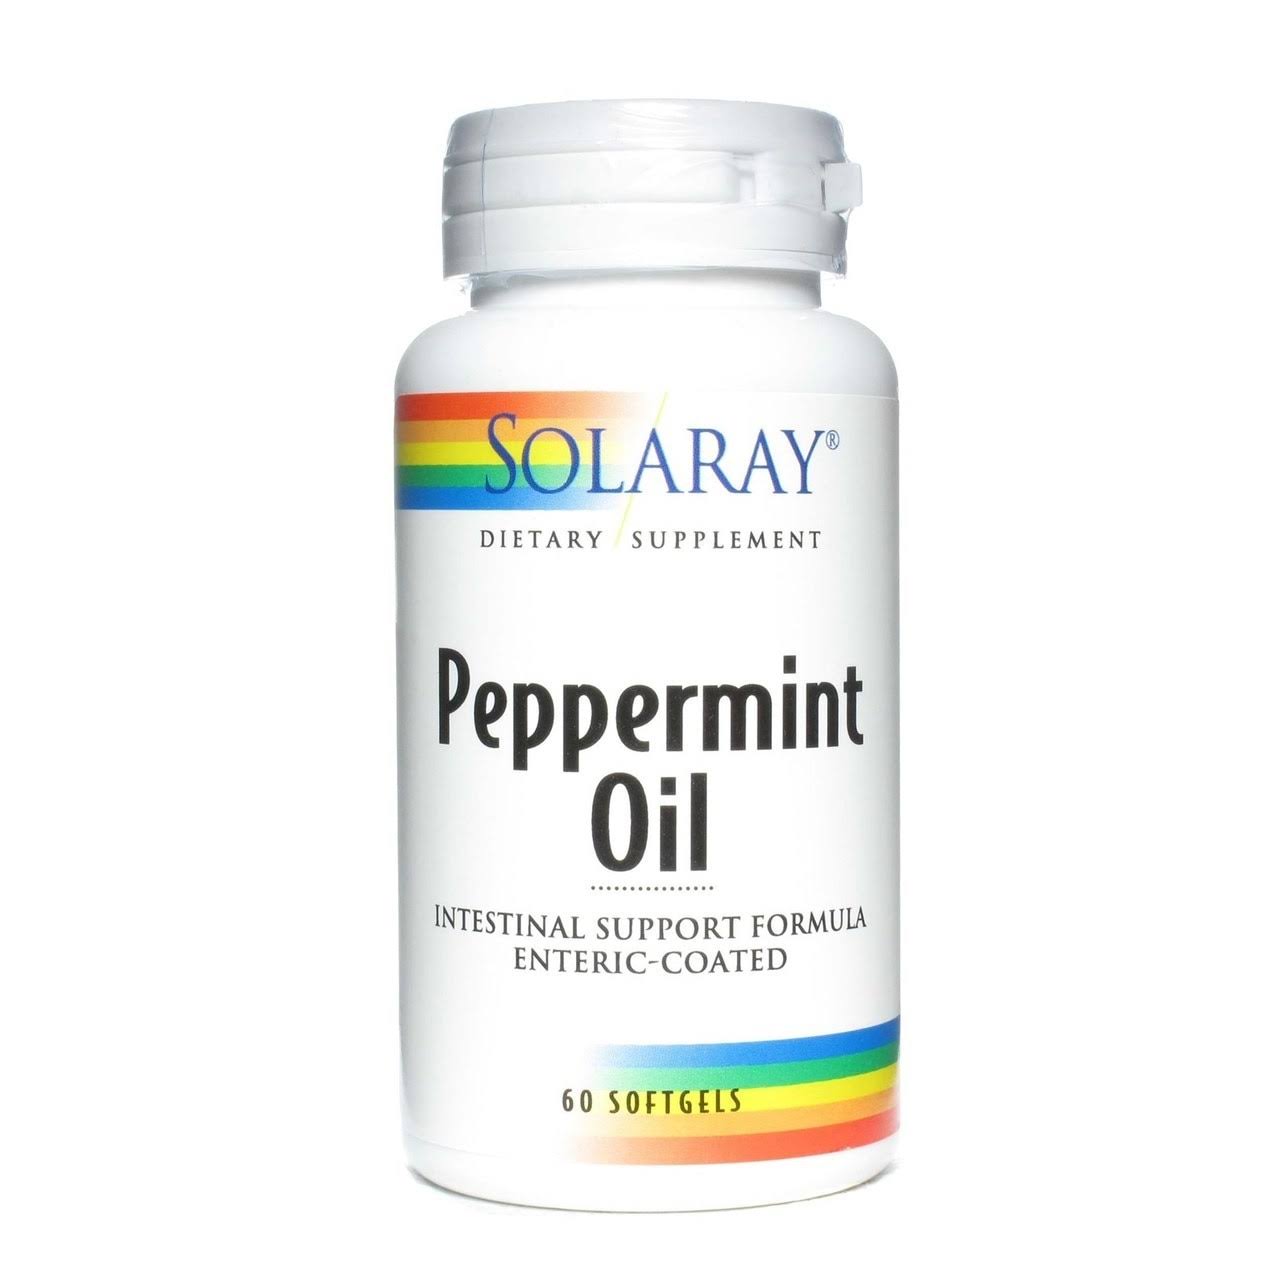 Solaray Peppermint Oil